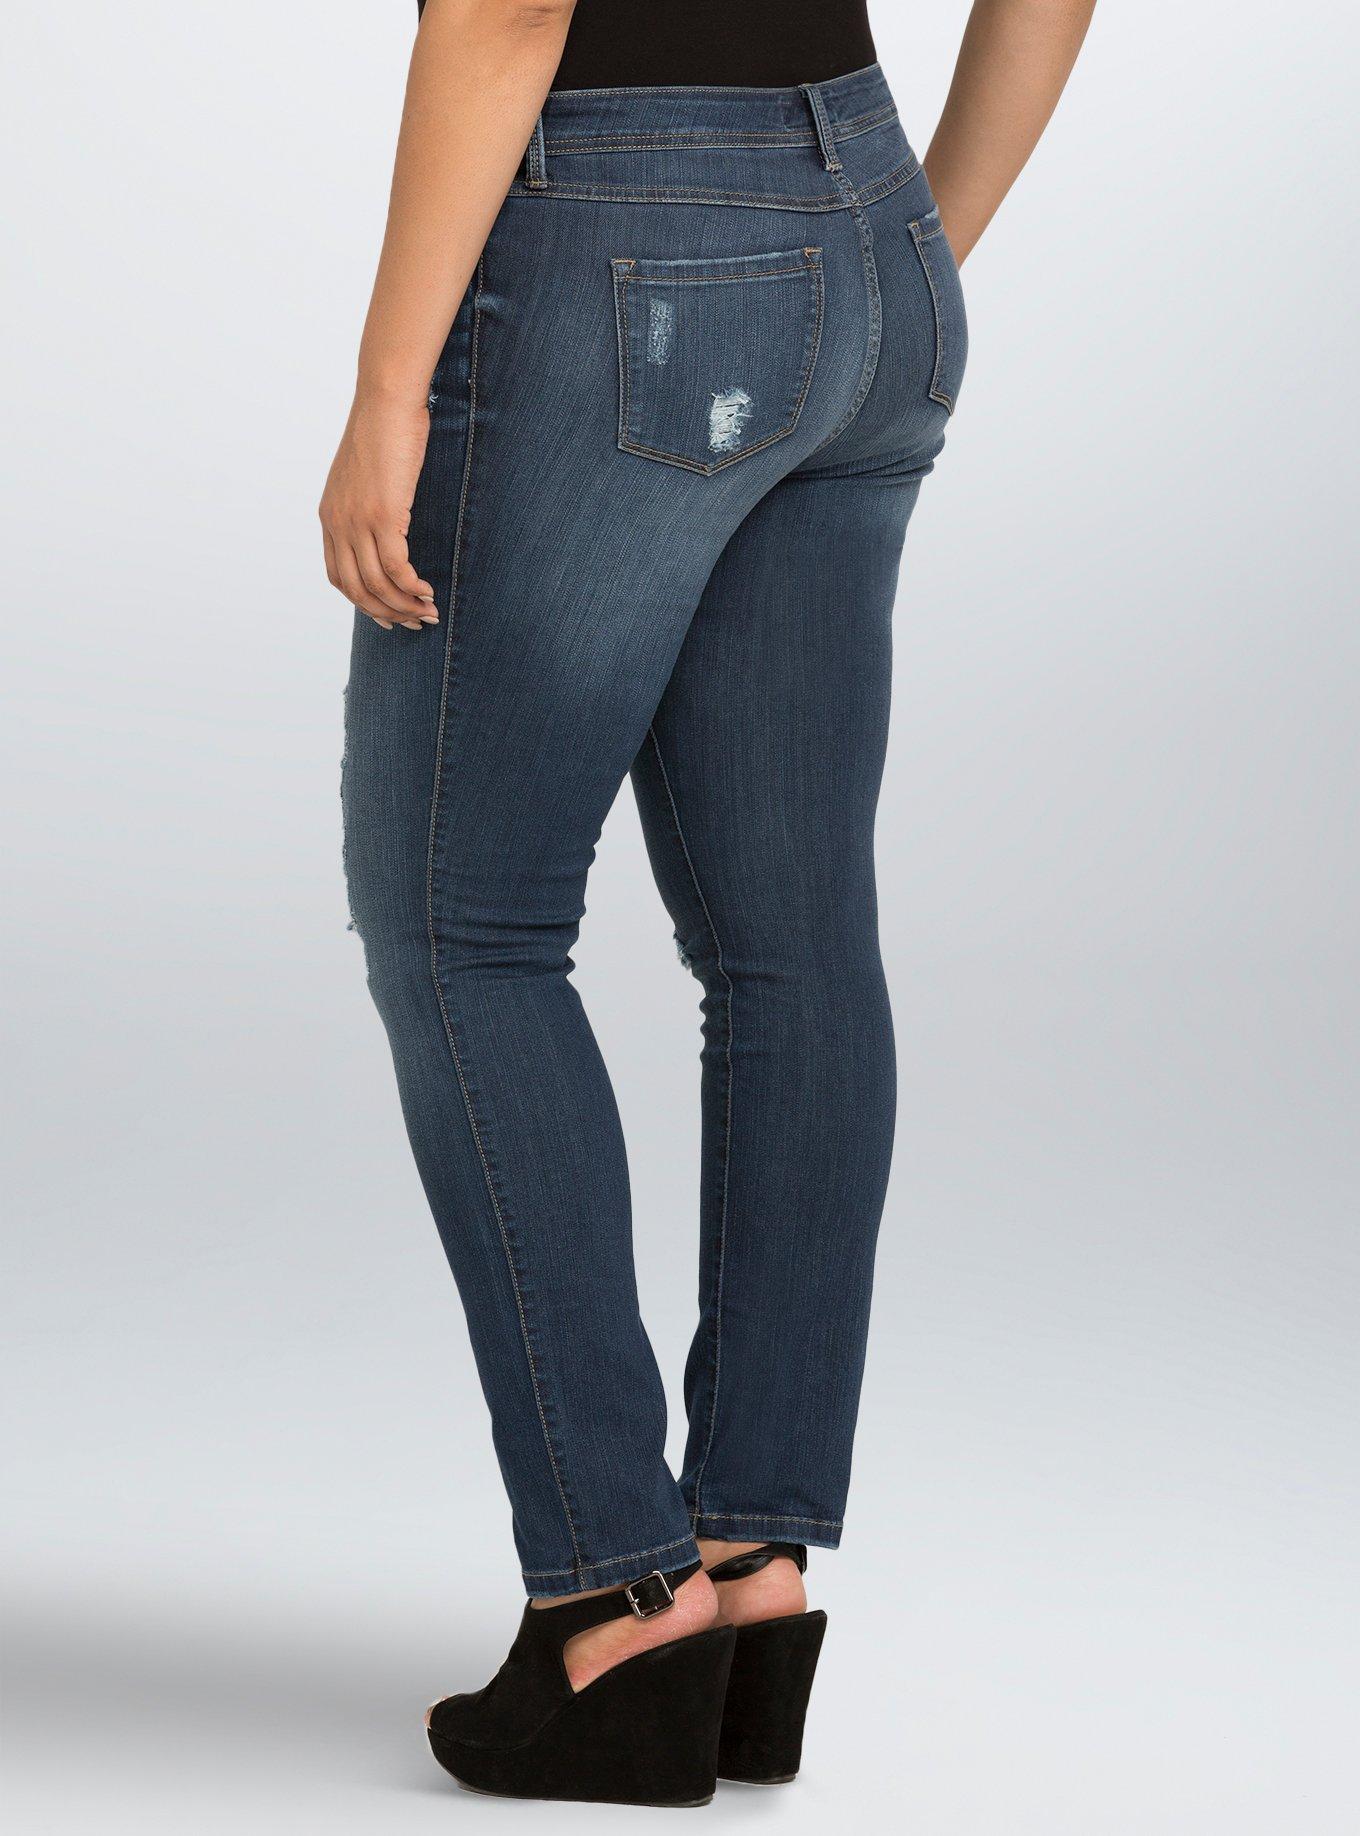 Plus Size Torrid Premium Stretch Luxe Skinny Jeans Medium Wash with